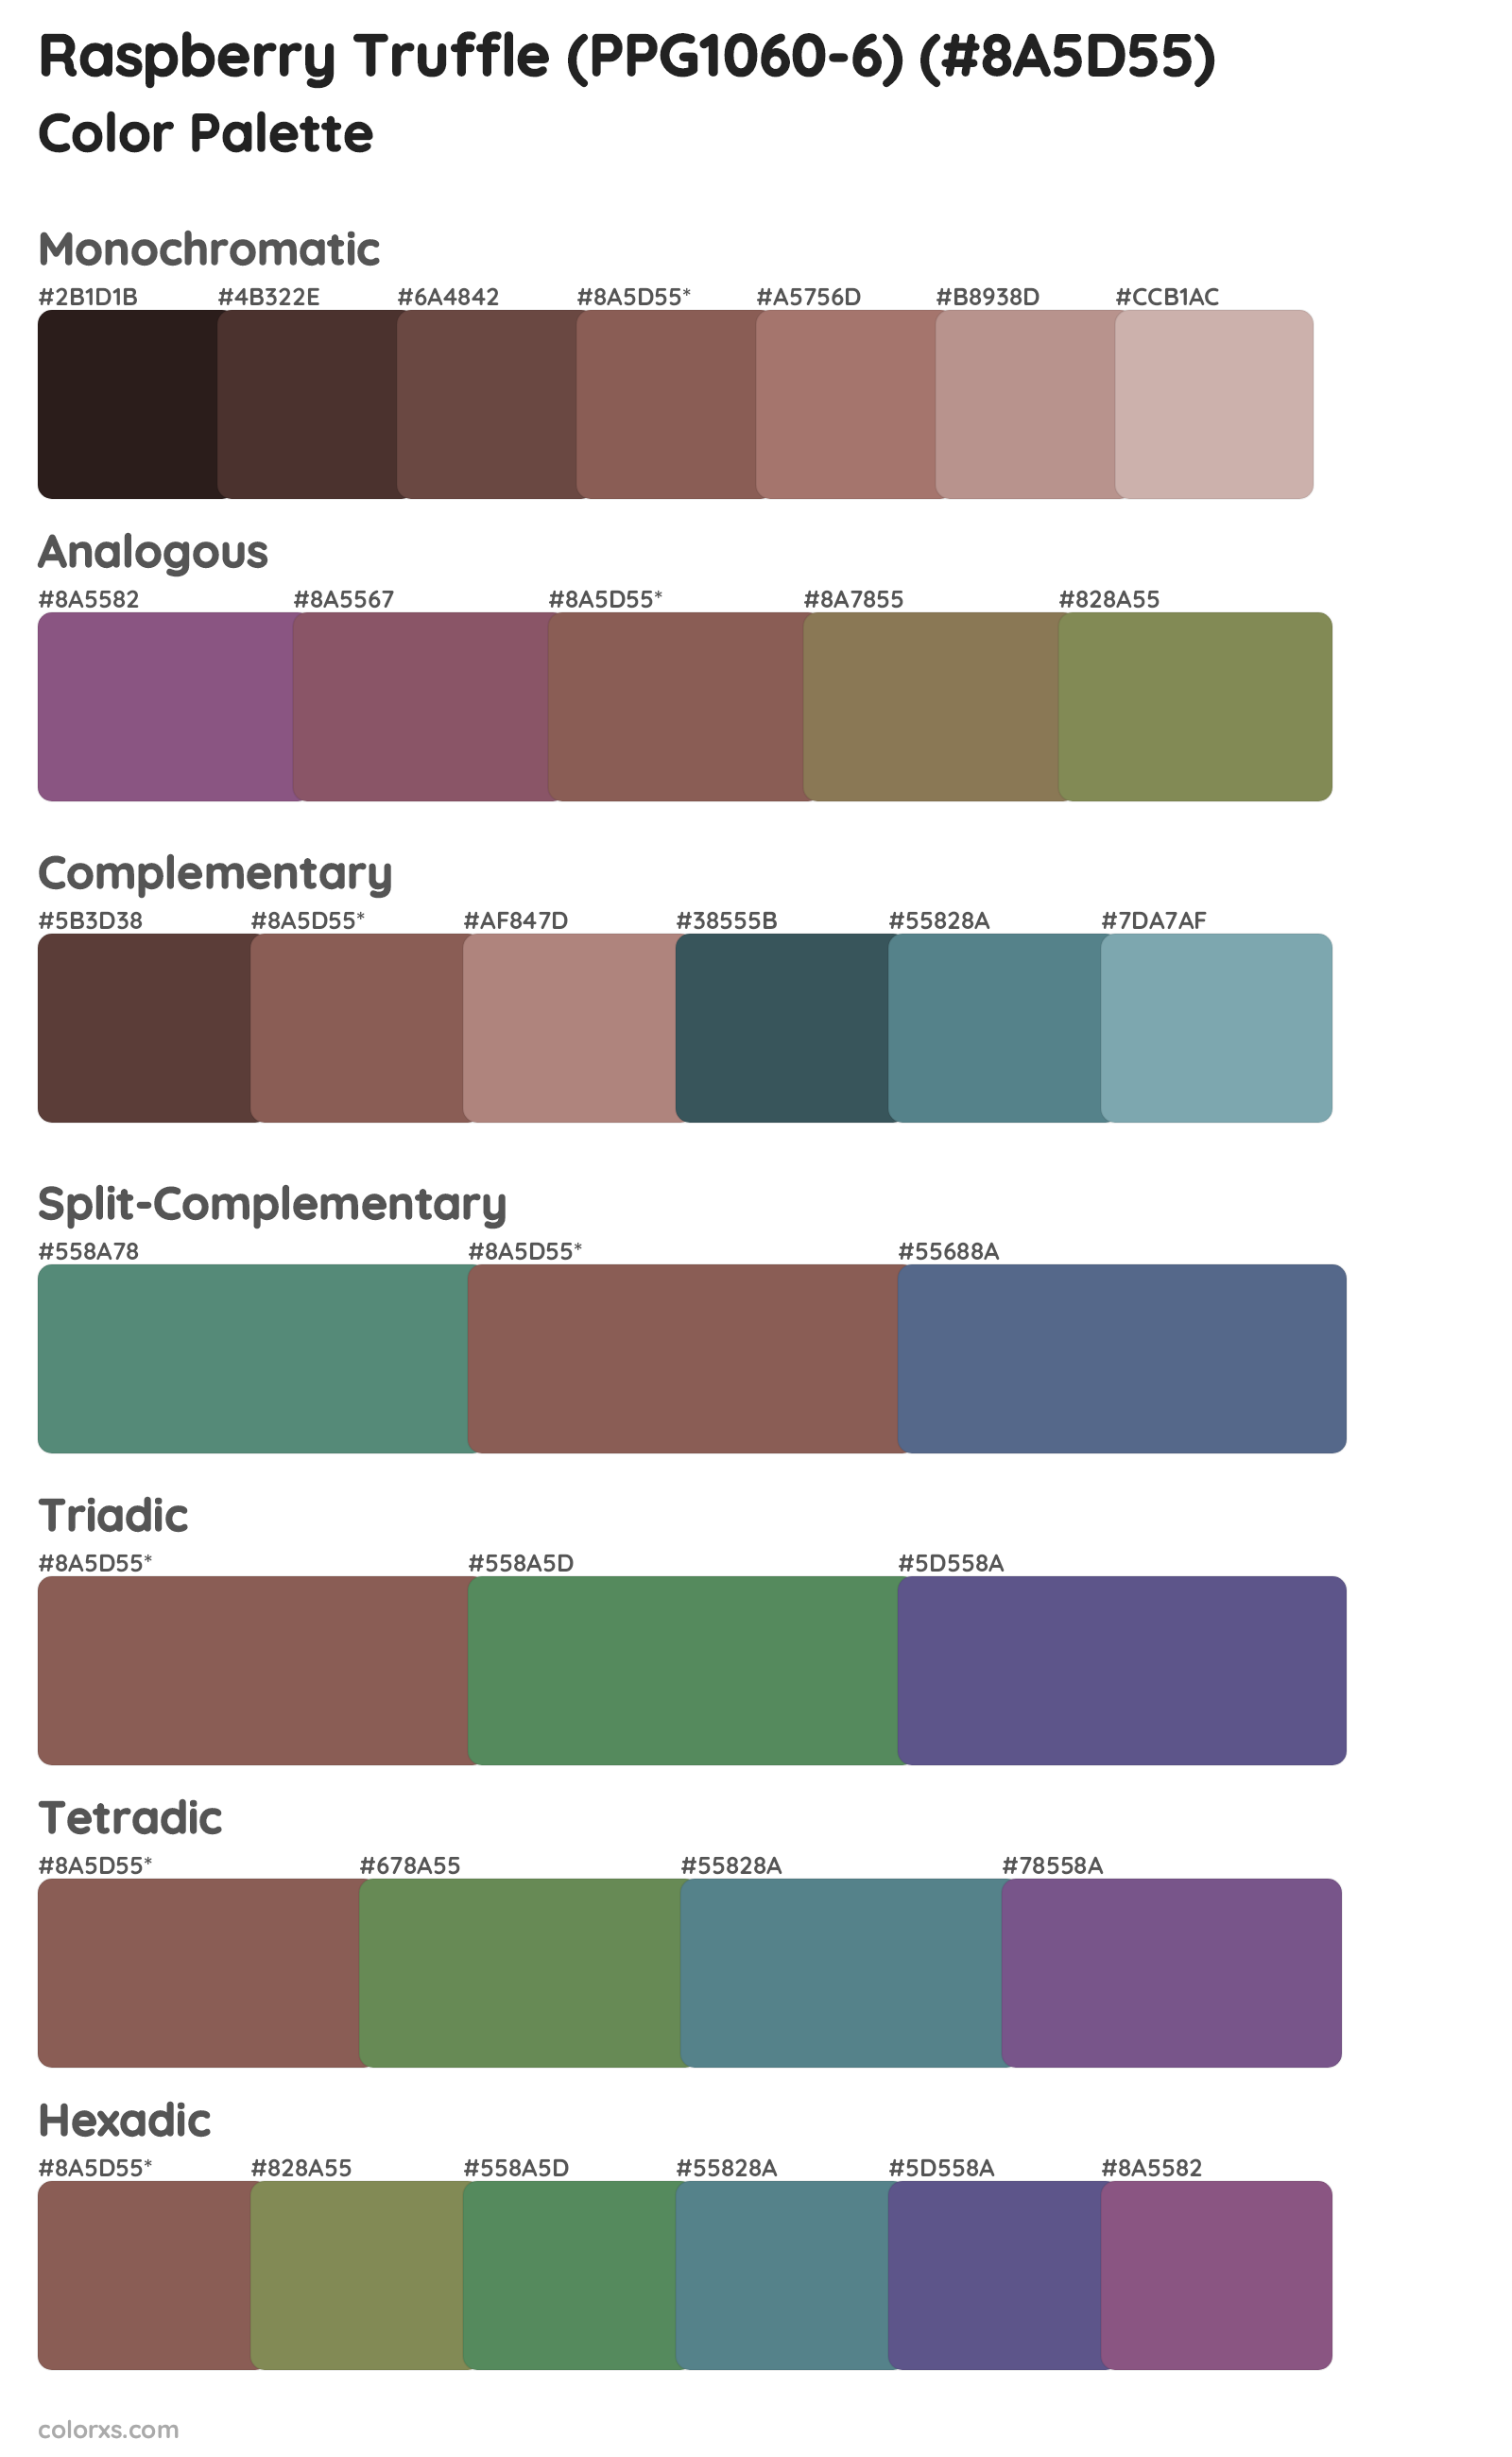 Raspberry Truffle (PPG1060-6) Color Scheme Palettes